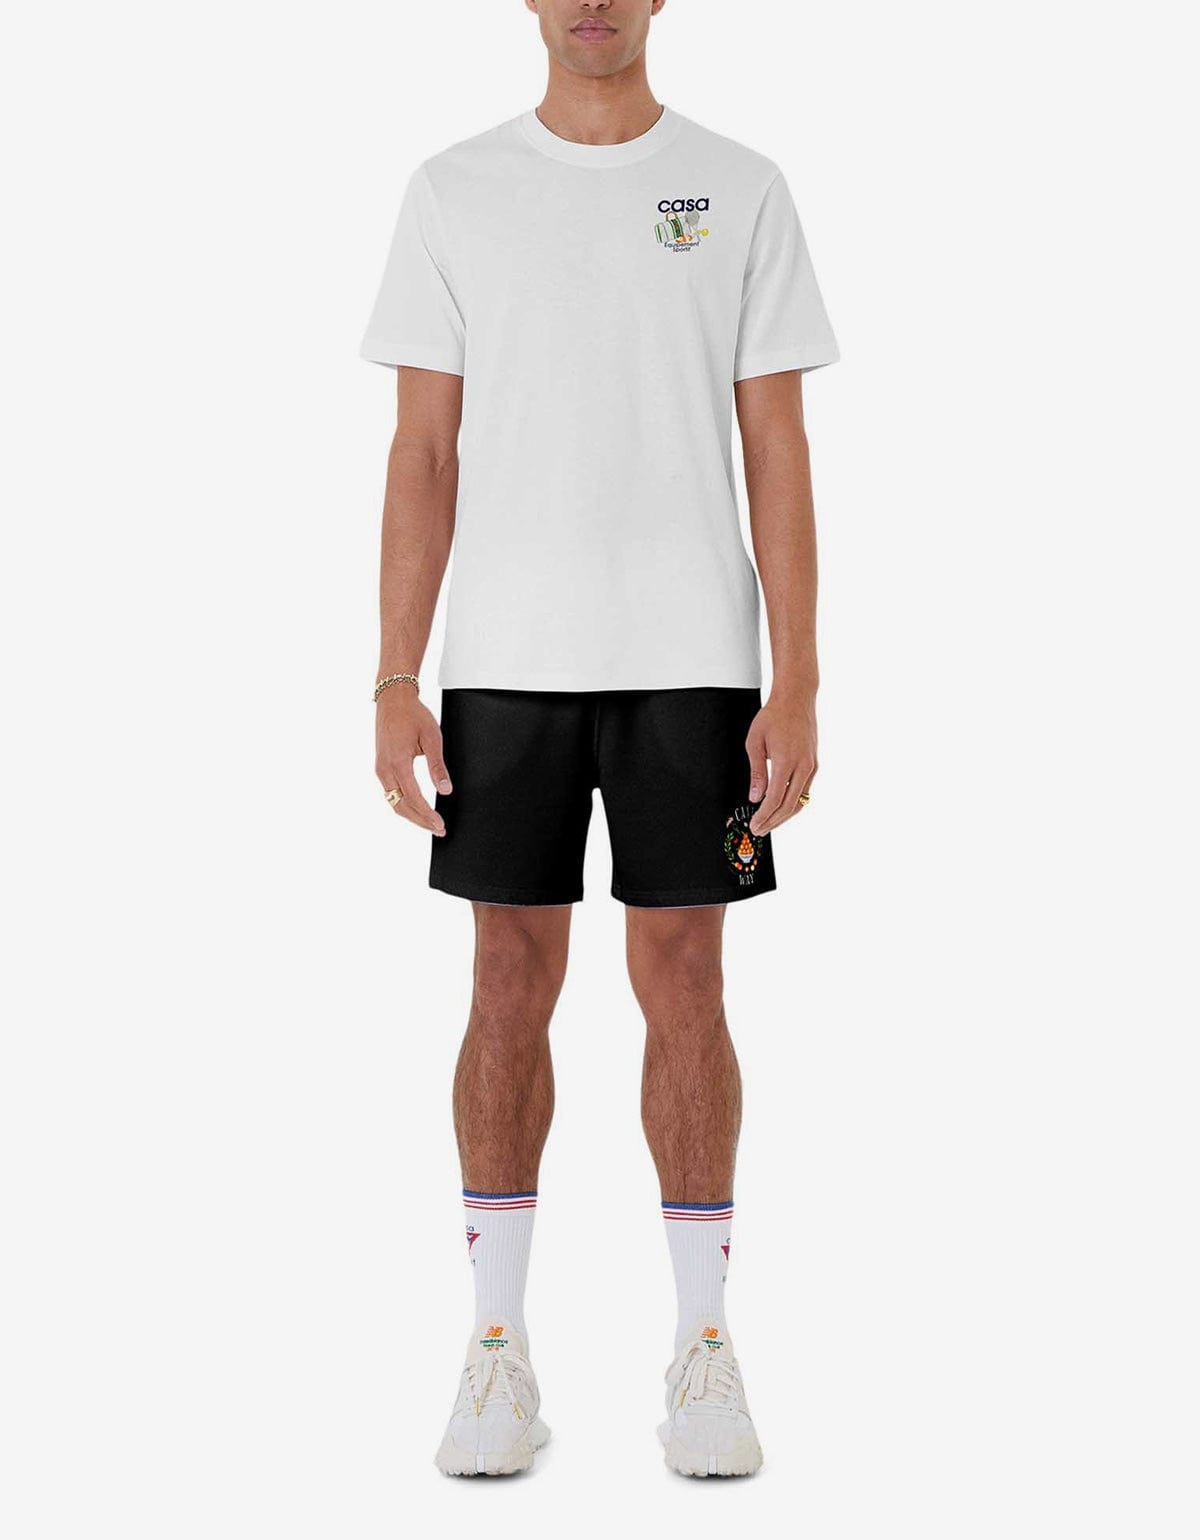 White Equipement Sportif Print T-Shirt - 3